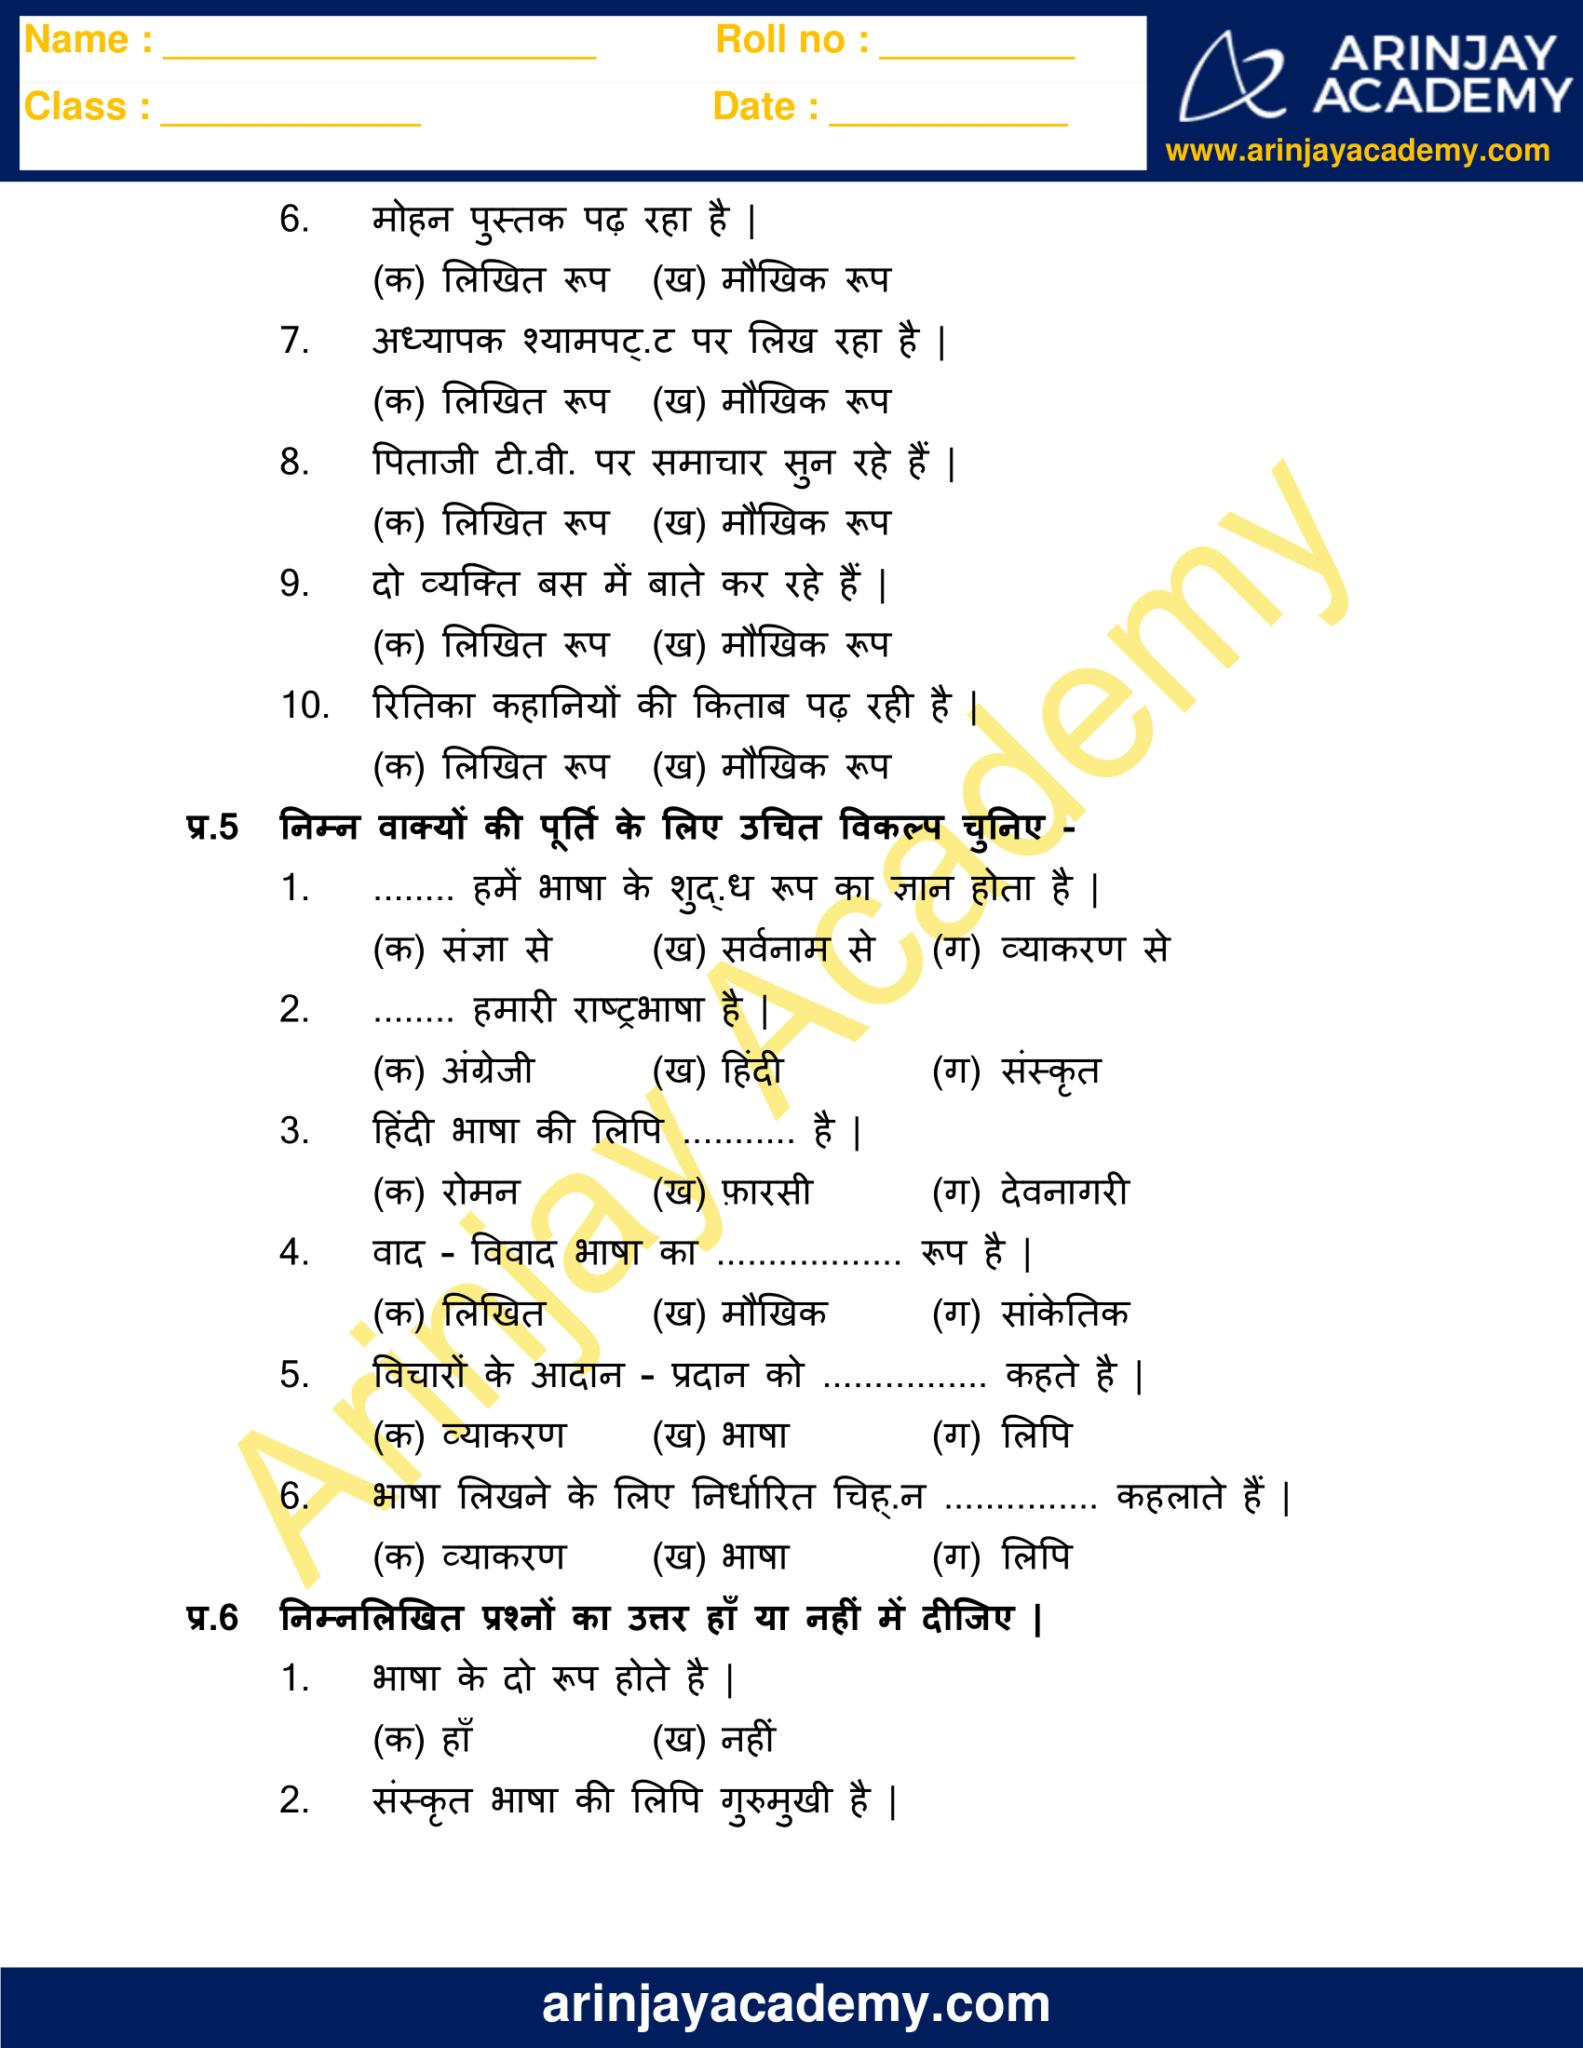 4th class homework hindi